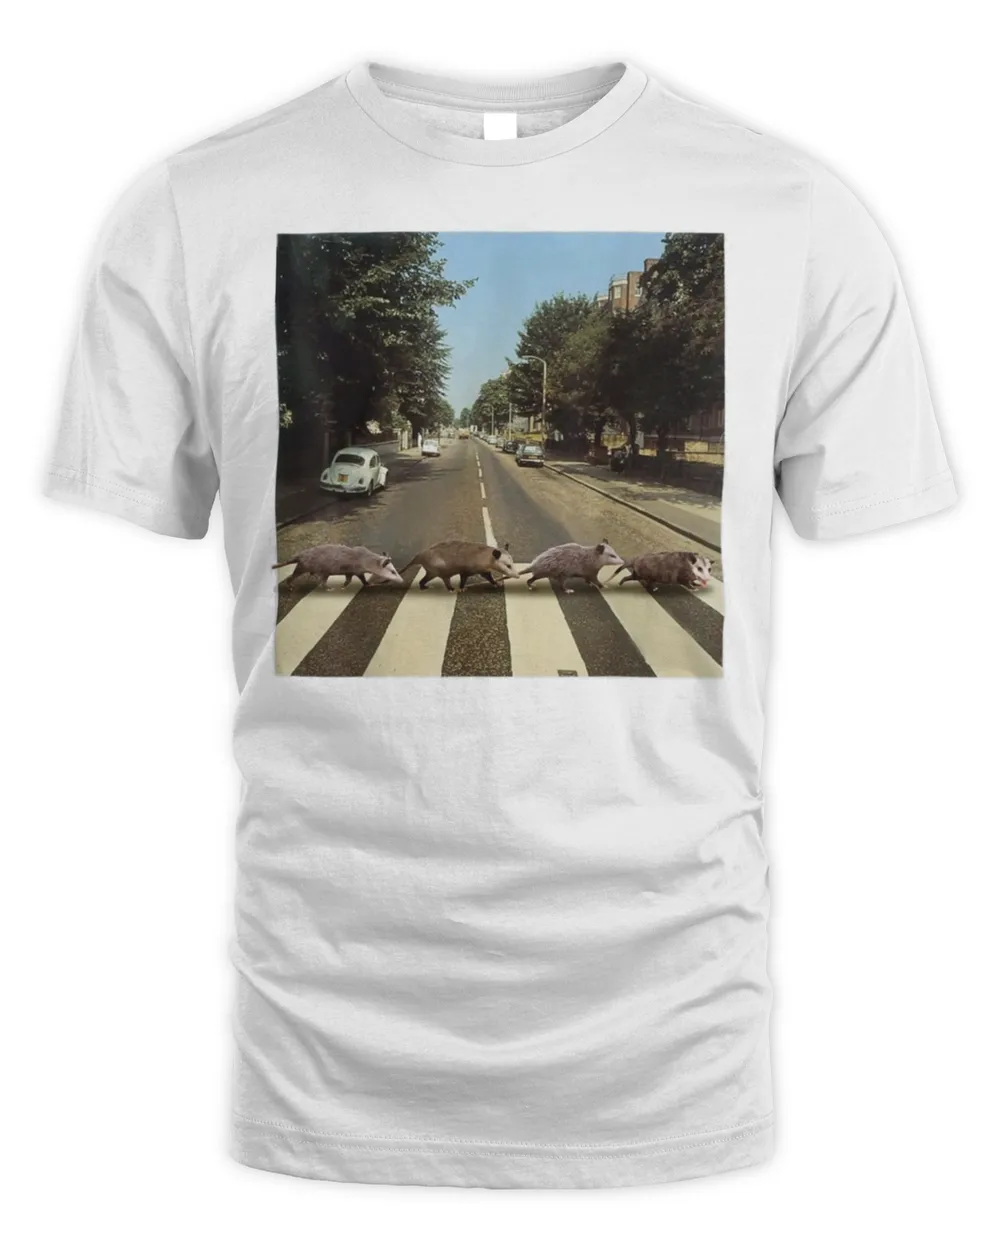 Possums Road Crossing Parody Opposum Lover Shirt